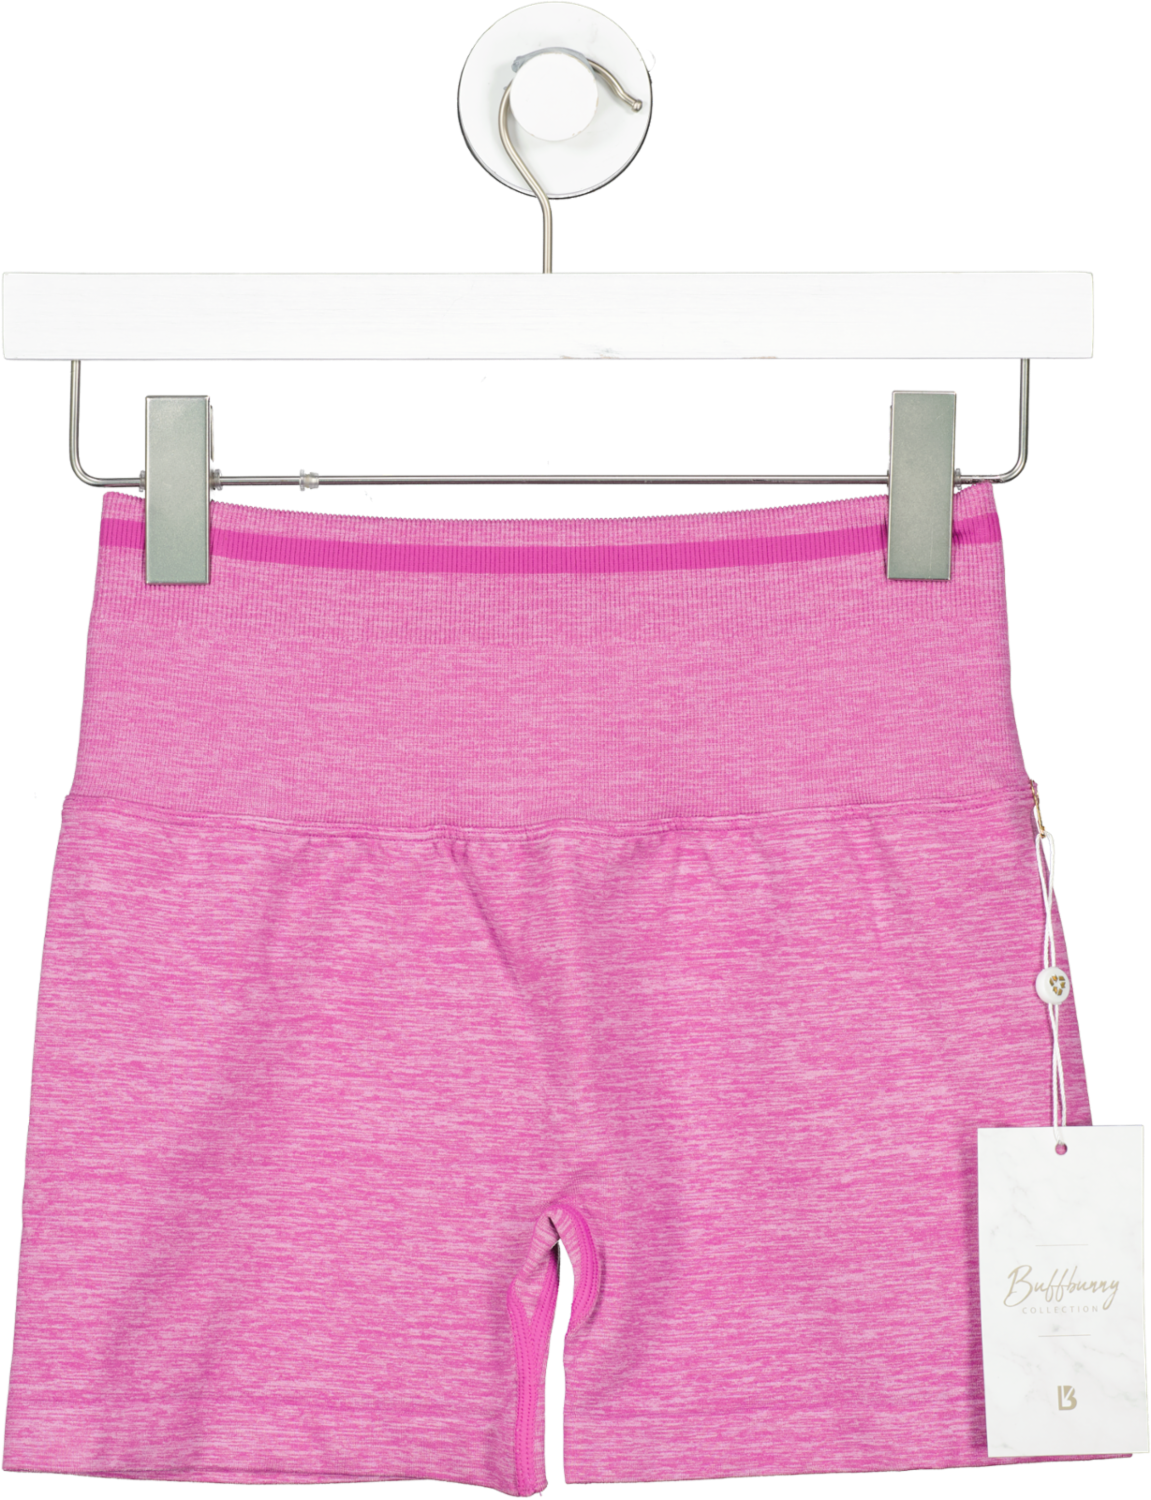 buffbunny Pink Bbl Seamless Shorts UK M